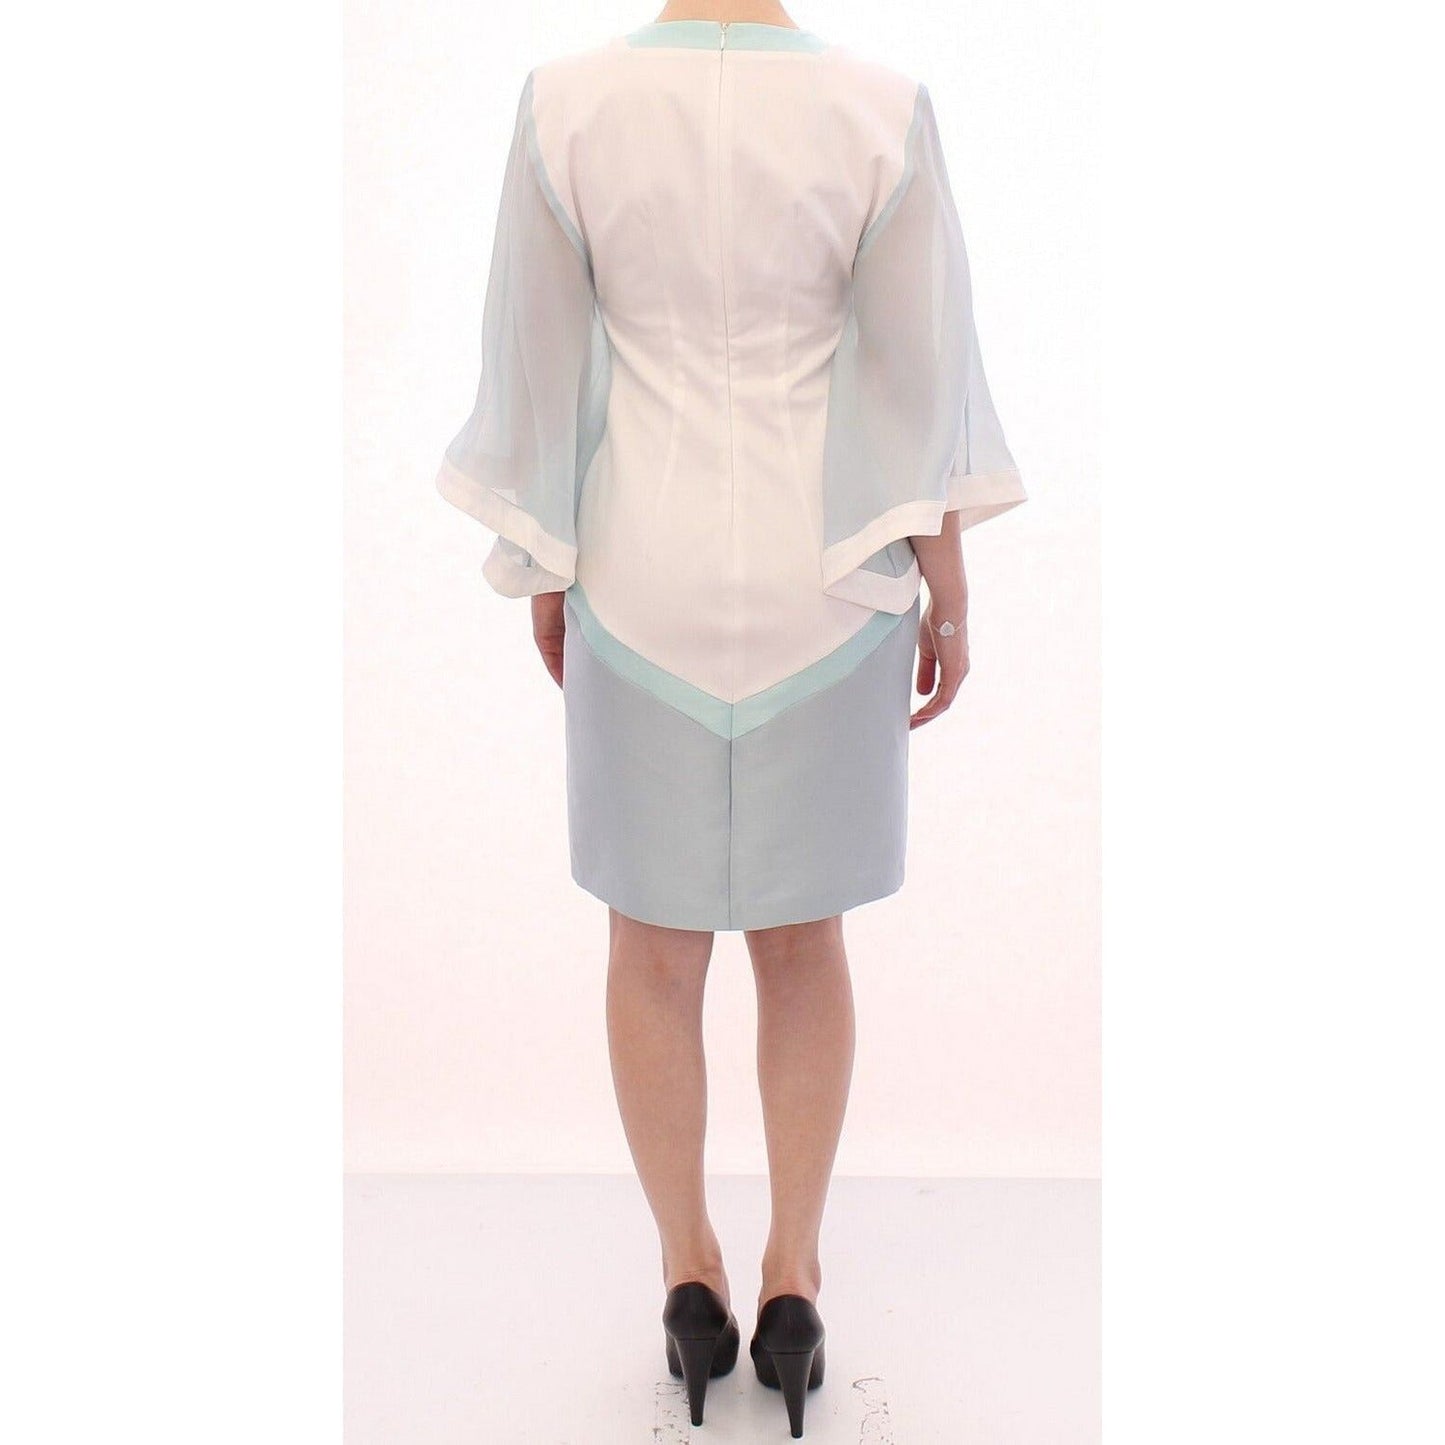 Sergei Grinko Elegant Turquoise Silk Sheath Dress WOMAN DRESSES white-silk-sheath-formal-turquoise-dress s-l1600-28-2-a93f8728-c22.jpg